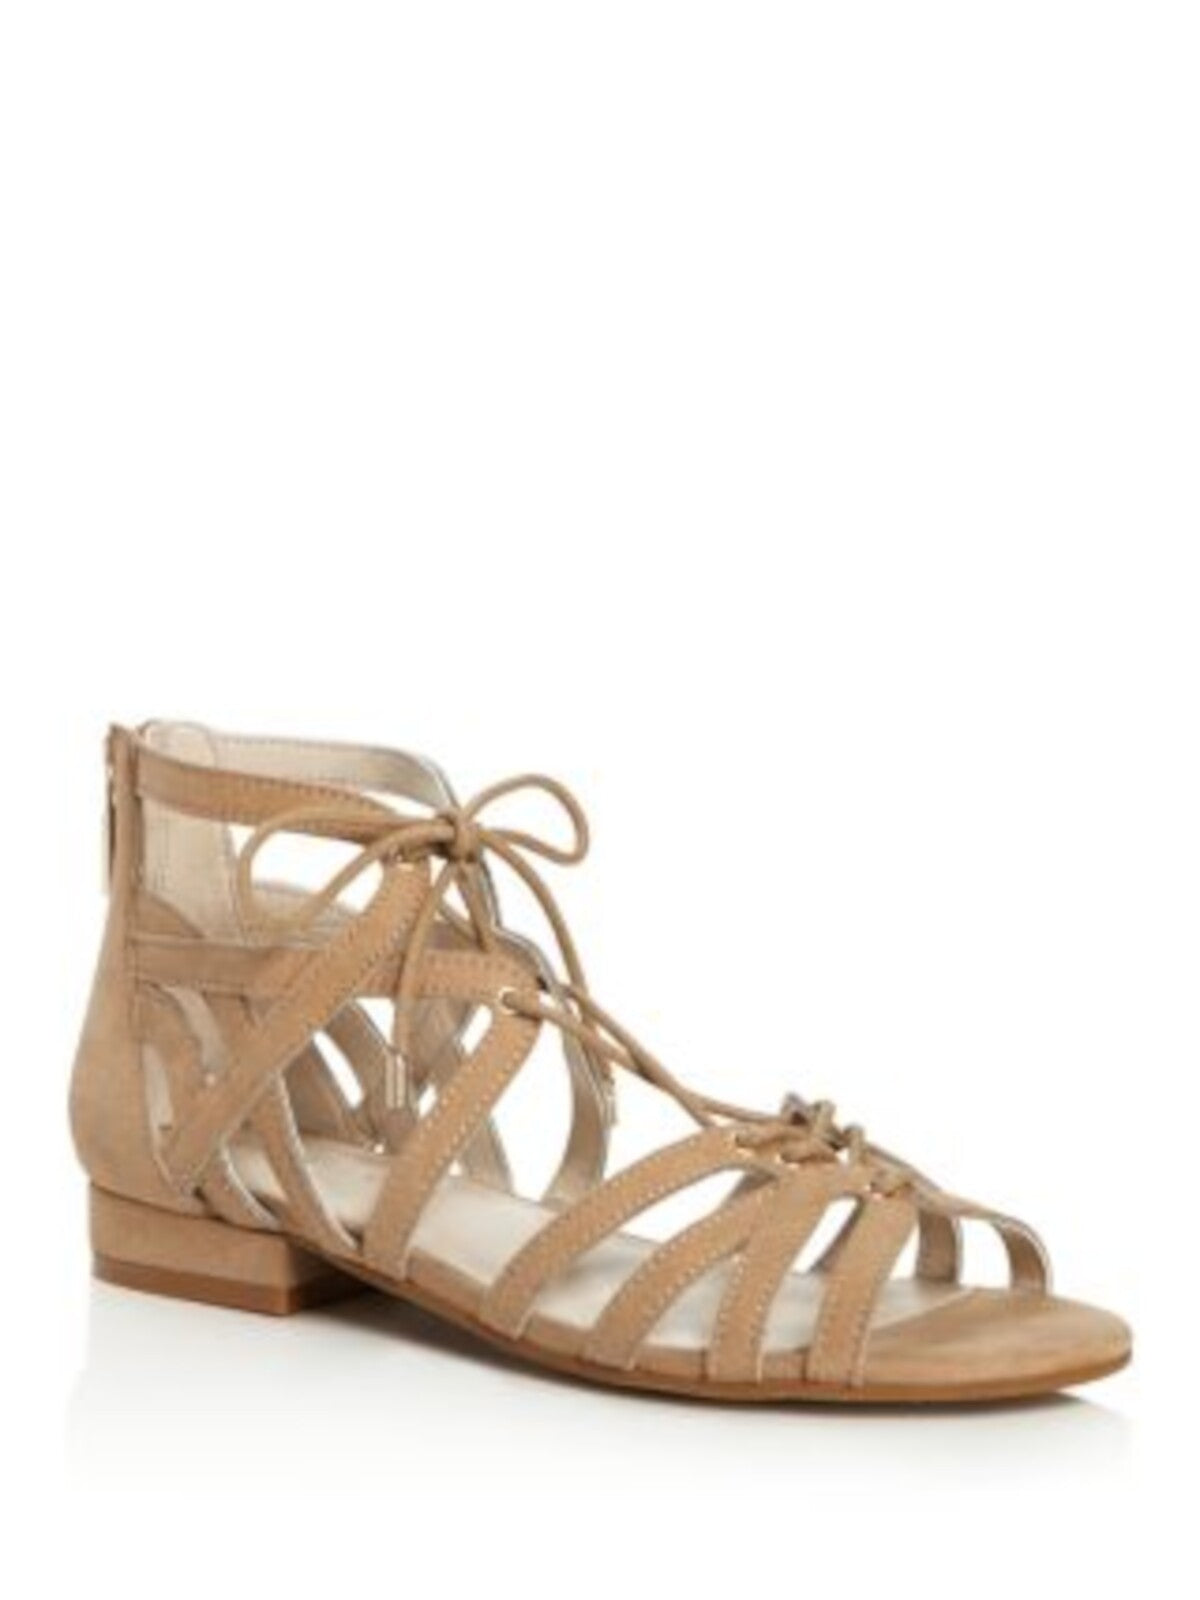 KENNETH COLE Womens Beige Lace Comfort Villa Round Toe Block Heel Zip-Up Gladiator Sandals Shoes 8 M